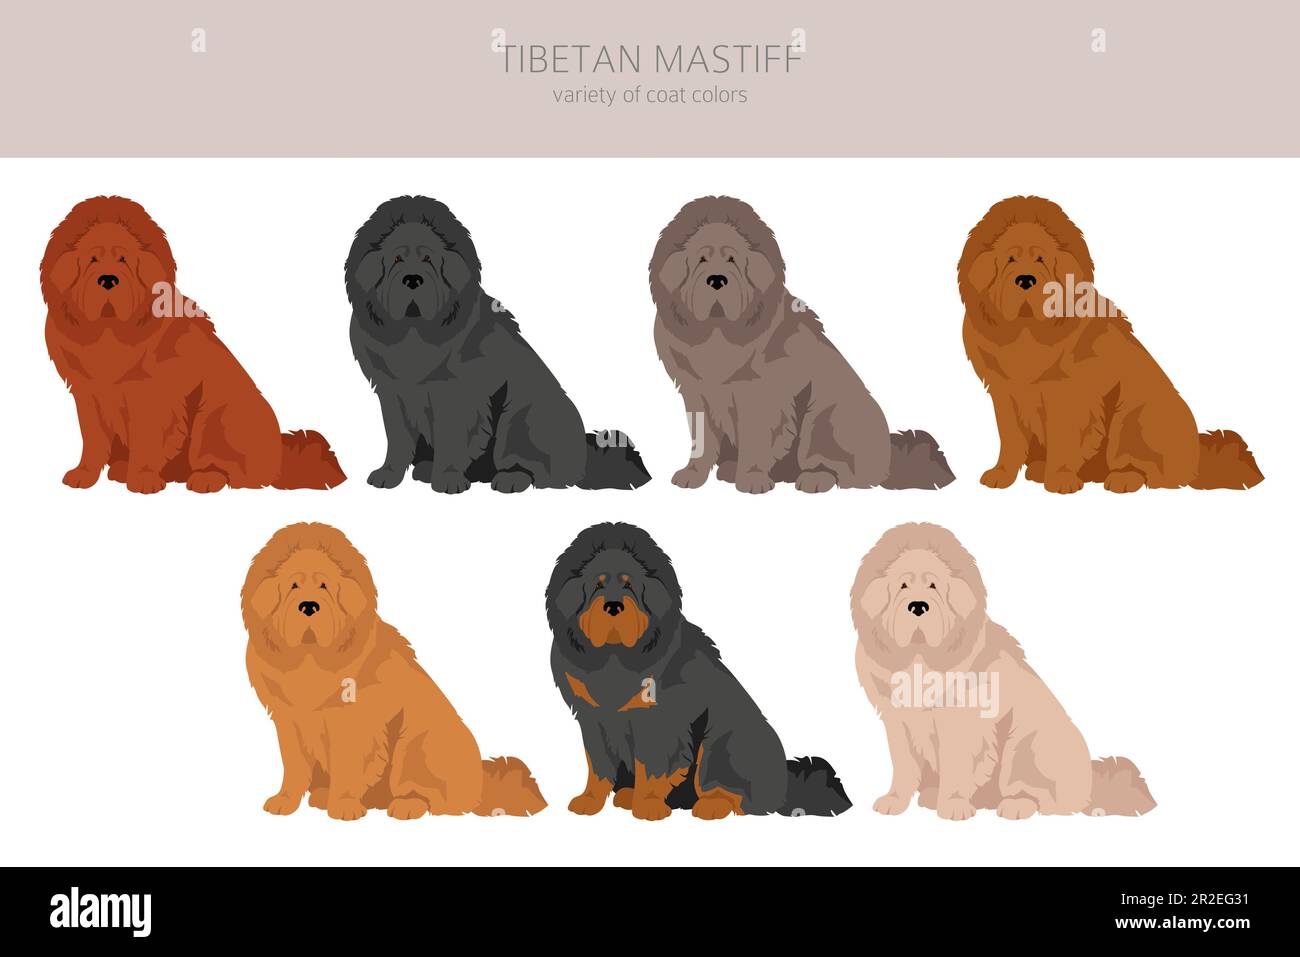 Tibetan mastiff clipart. Different poses, coat colors set.  Vector illustration Stock Vector